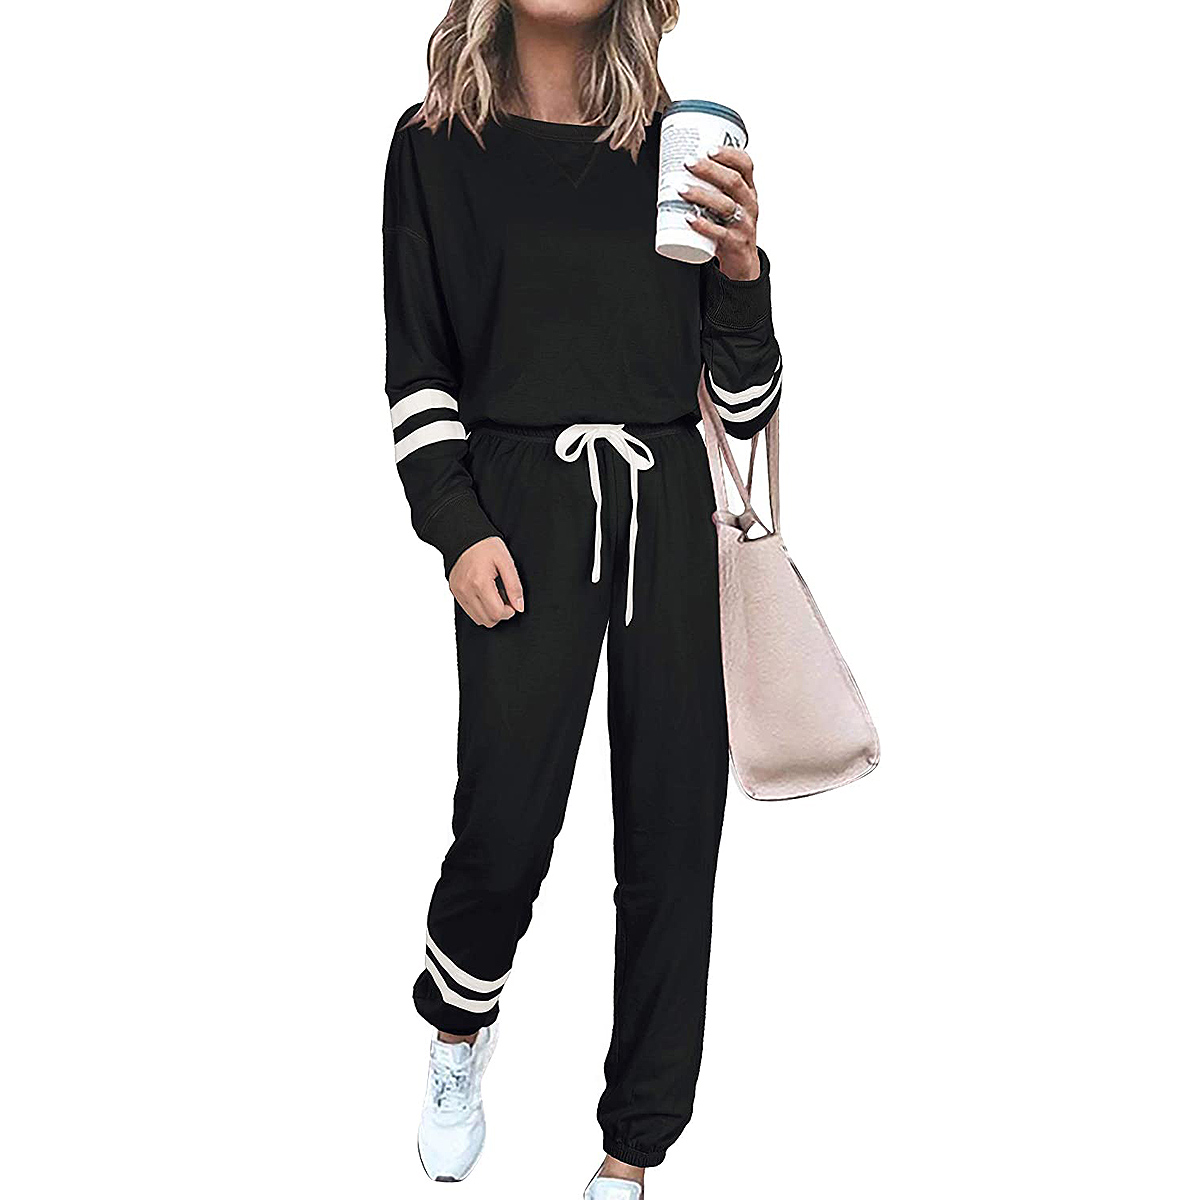 SIEANEAR 2-Piece Sweatsuit Is Shockingly Fashionable | UsWeekly